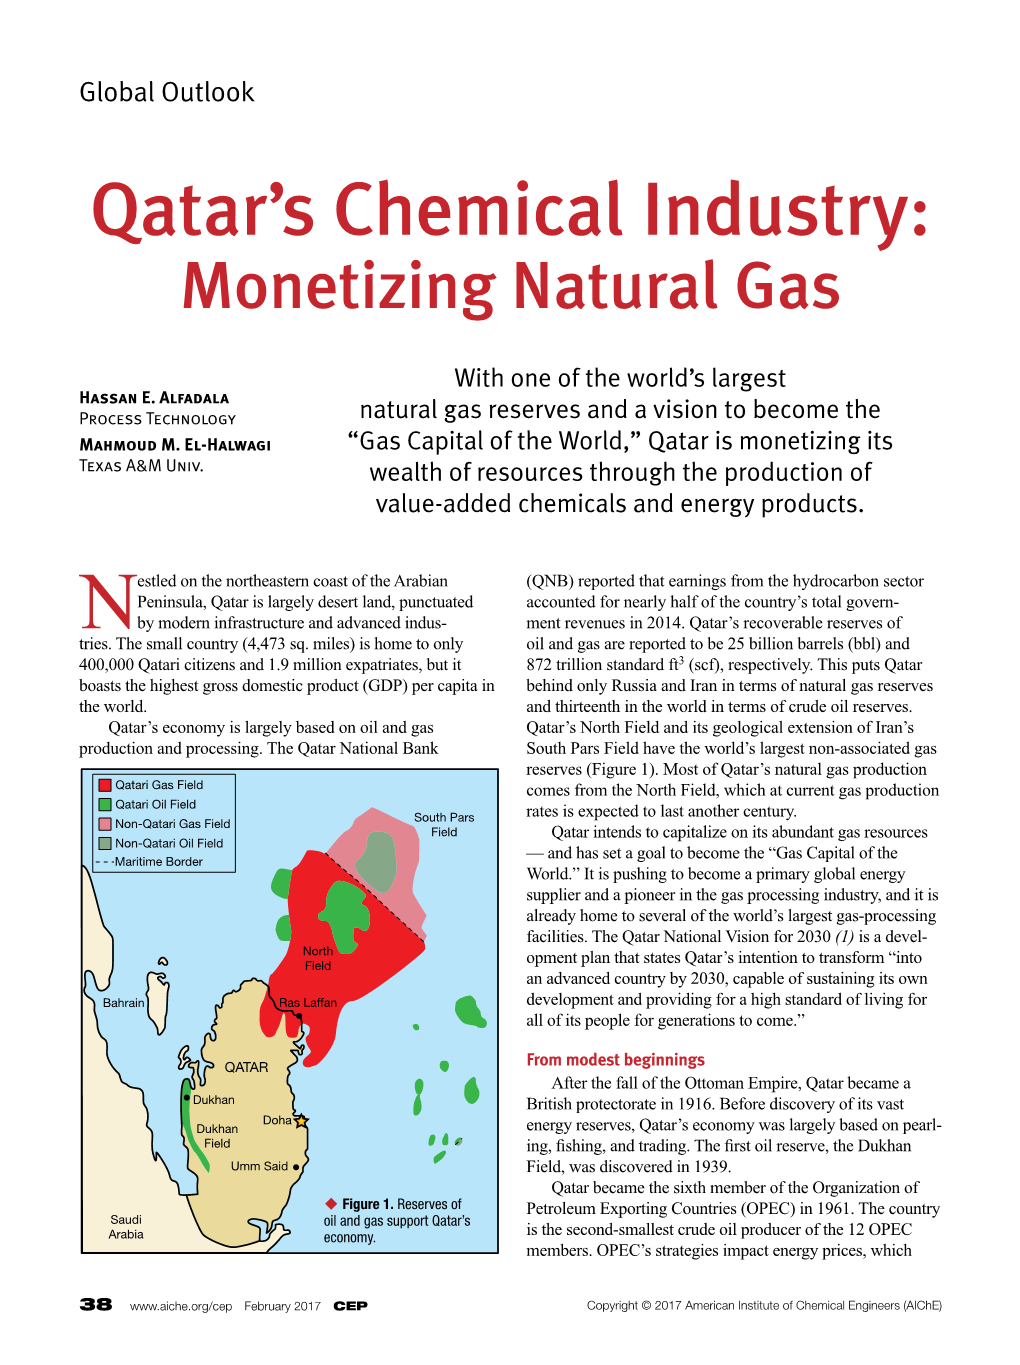 Qatar's Chemical Industry